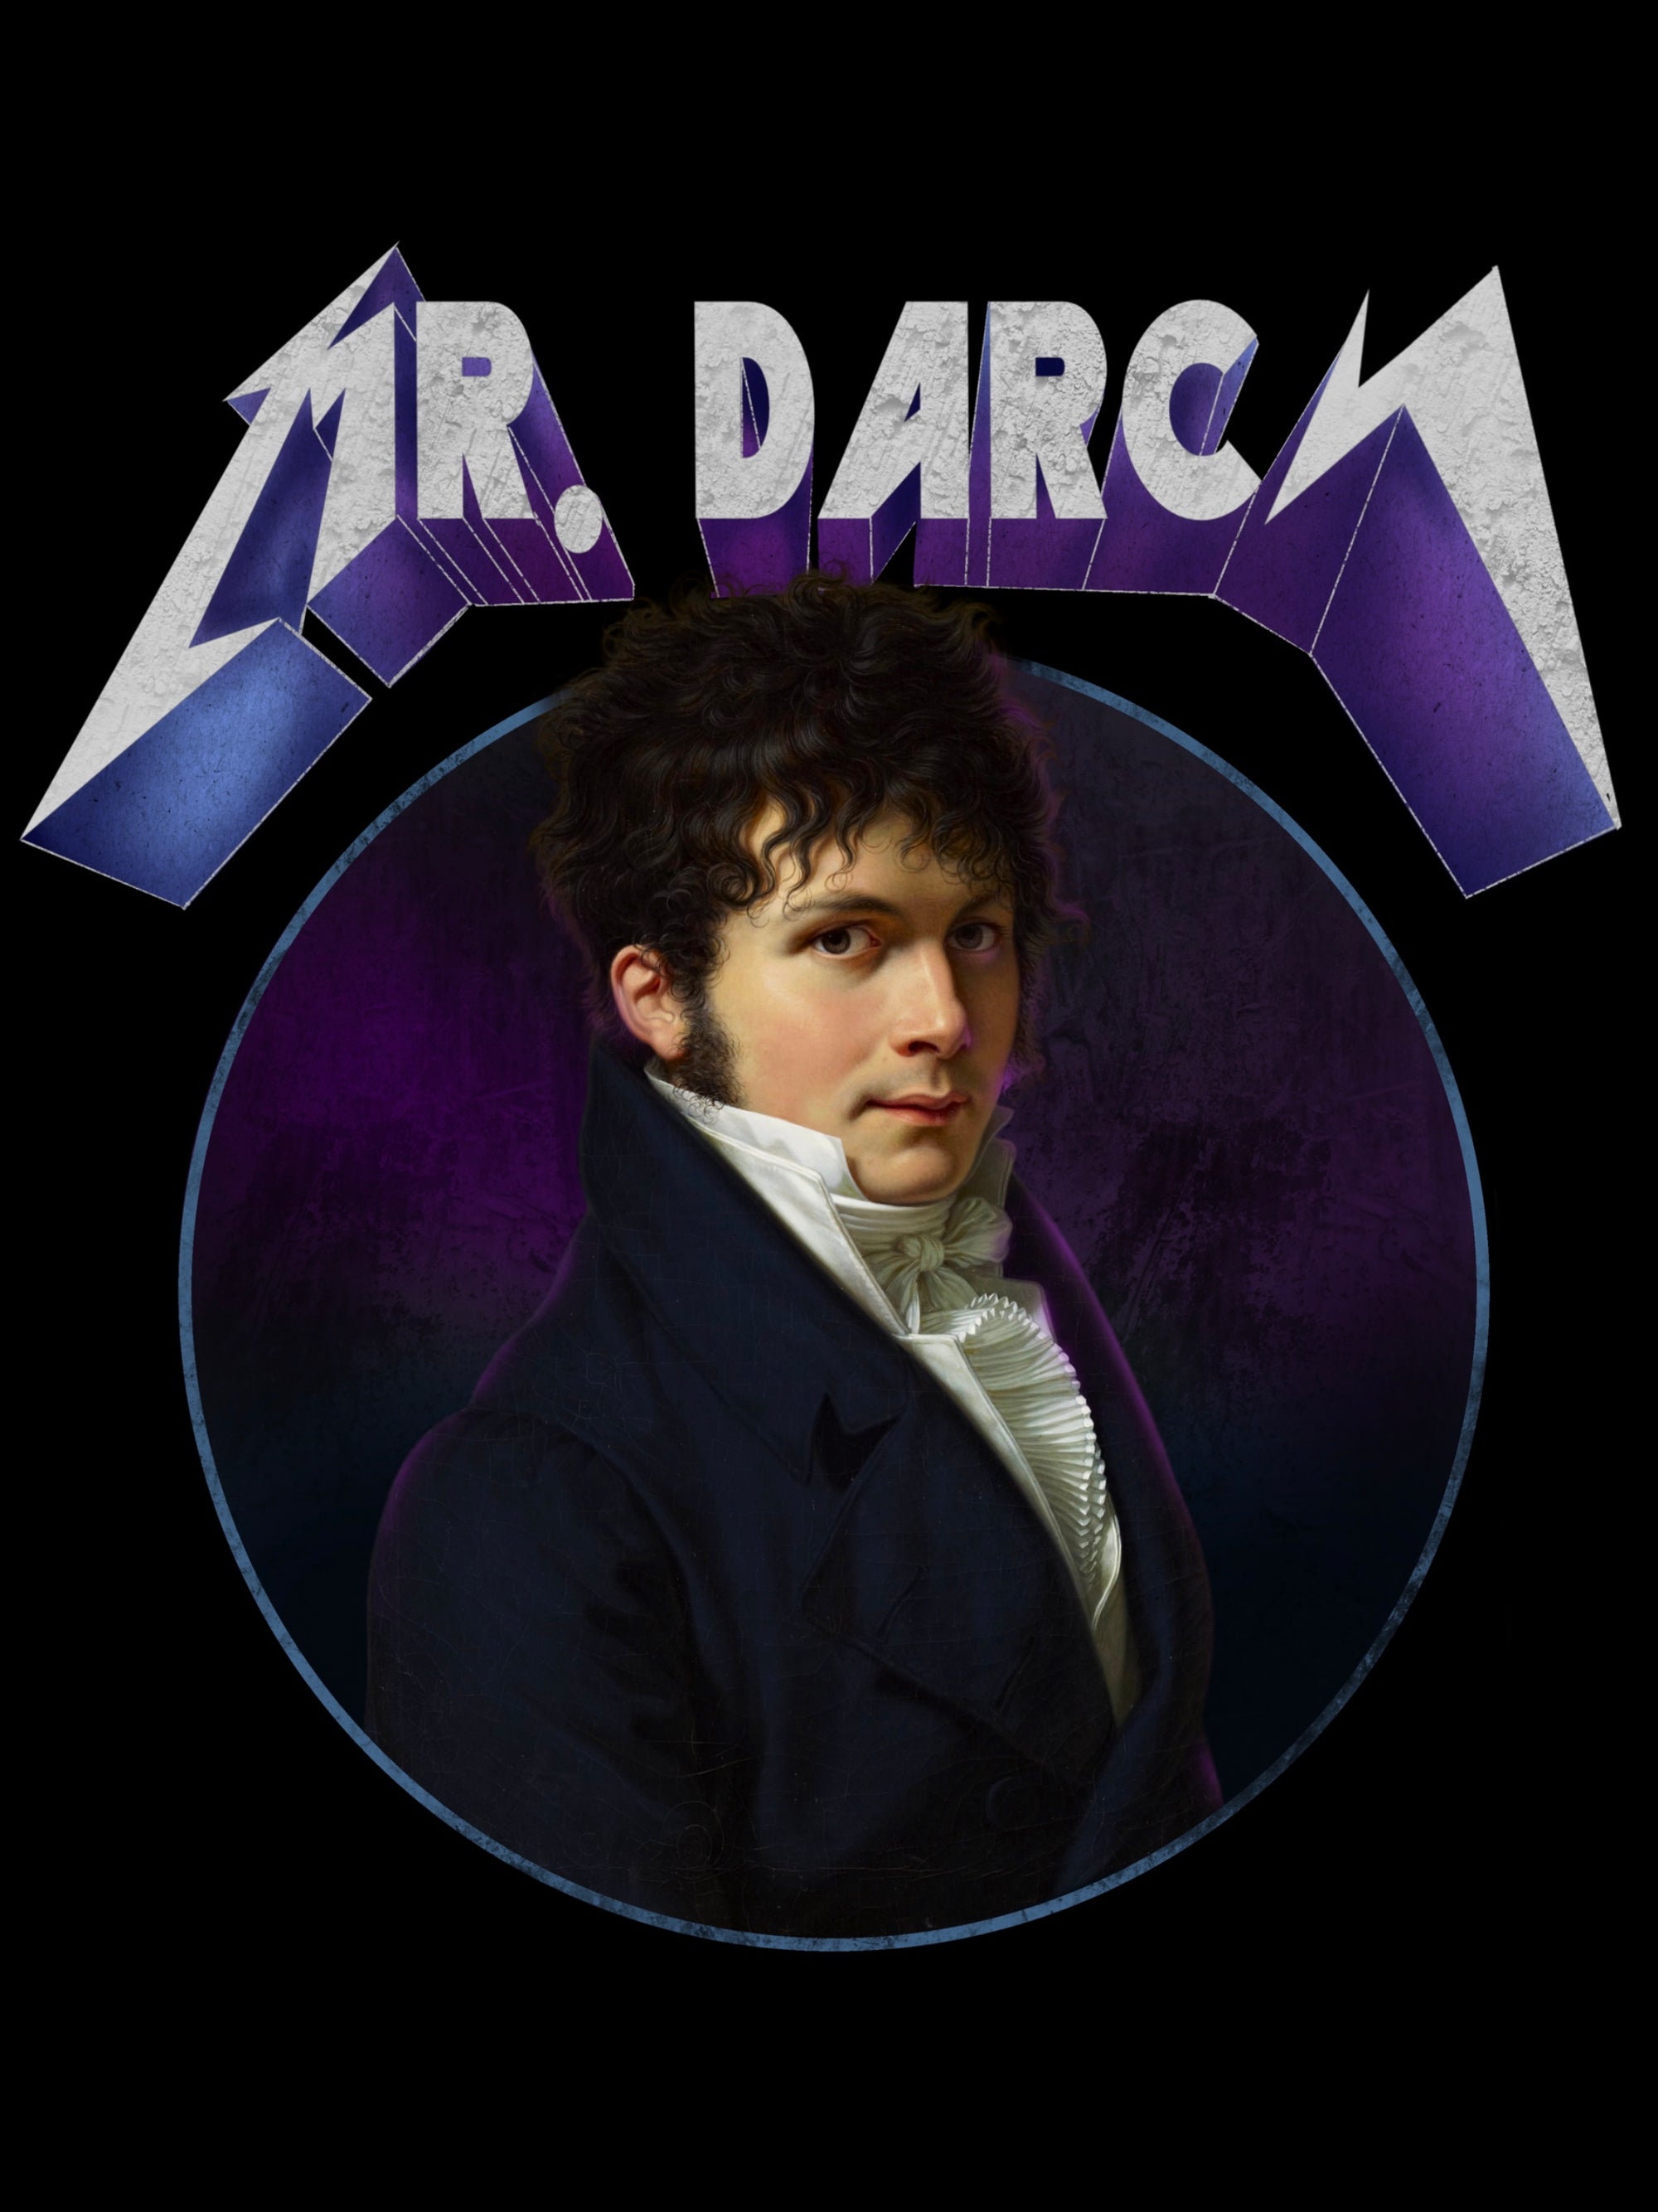 Mr. Darcy Band Sweatshirt